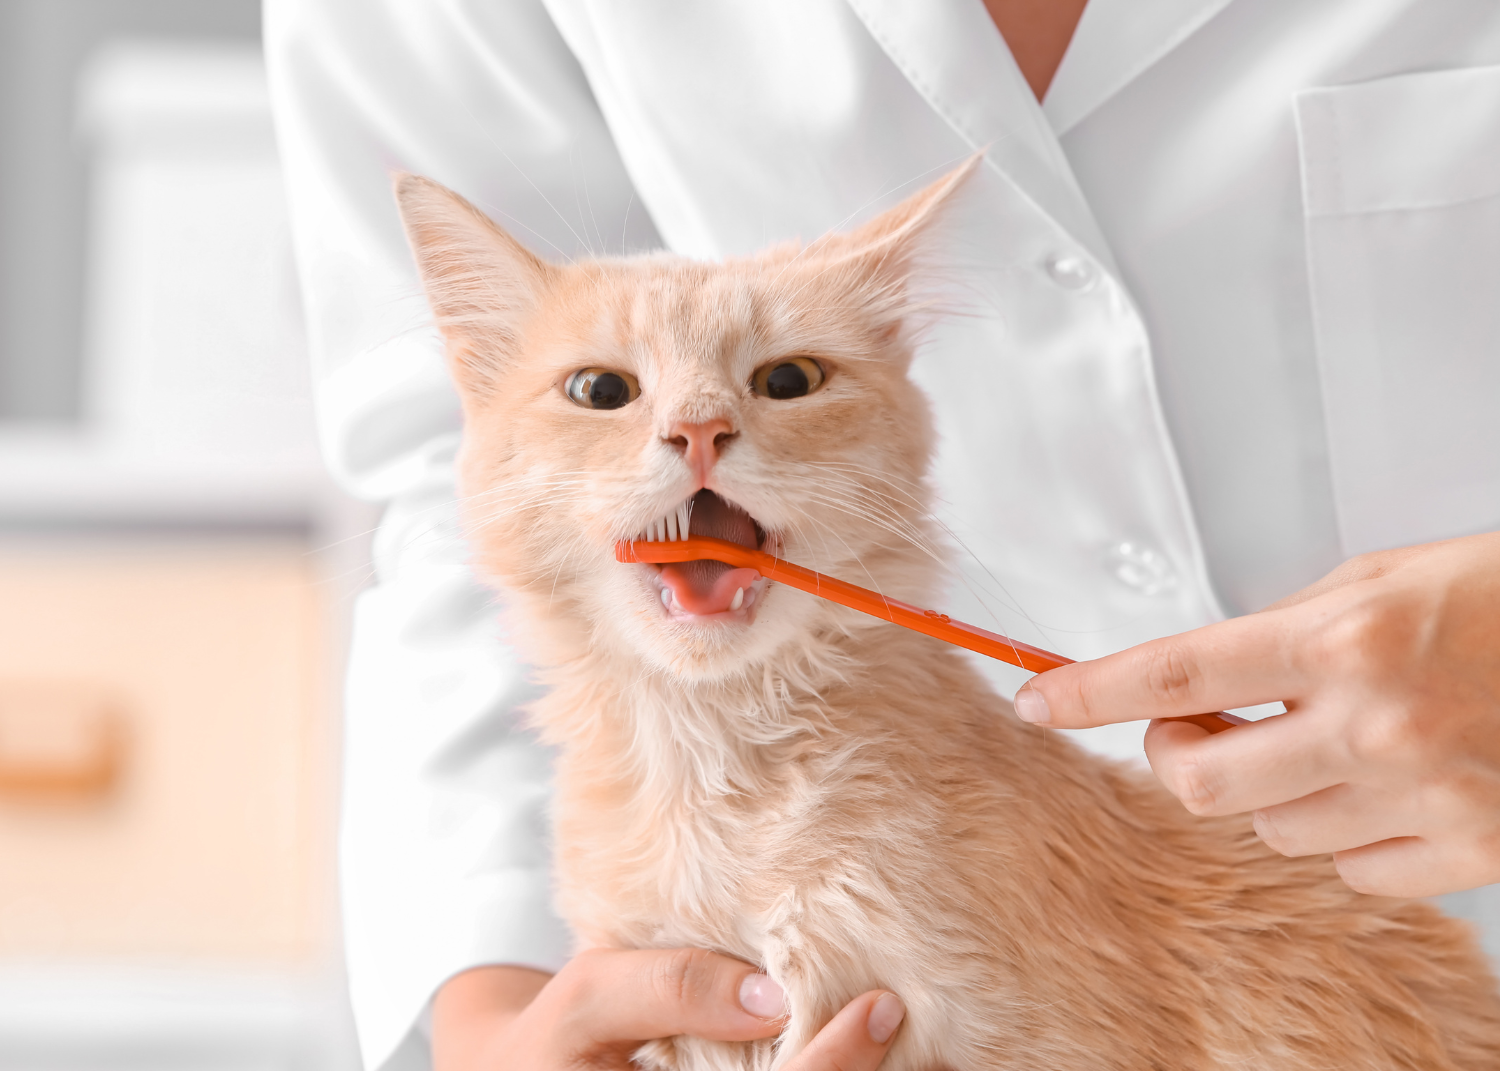 brushing a cat's teeth - orange tabby cat getting his teeth brushed